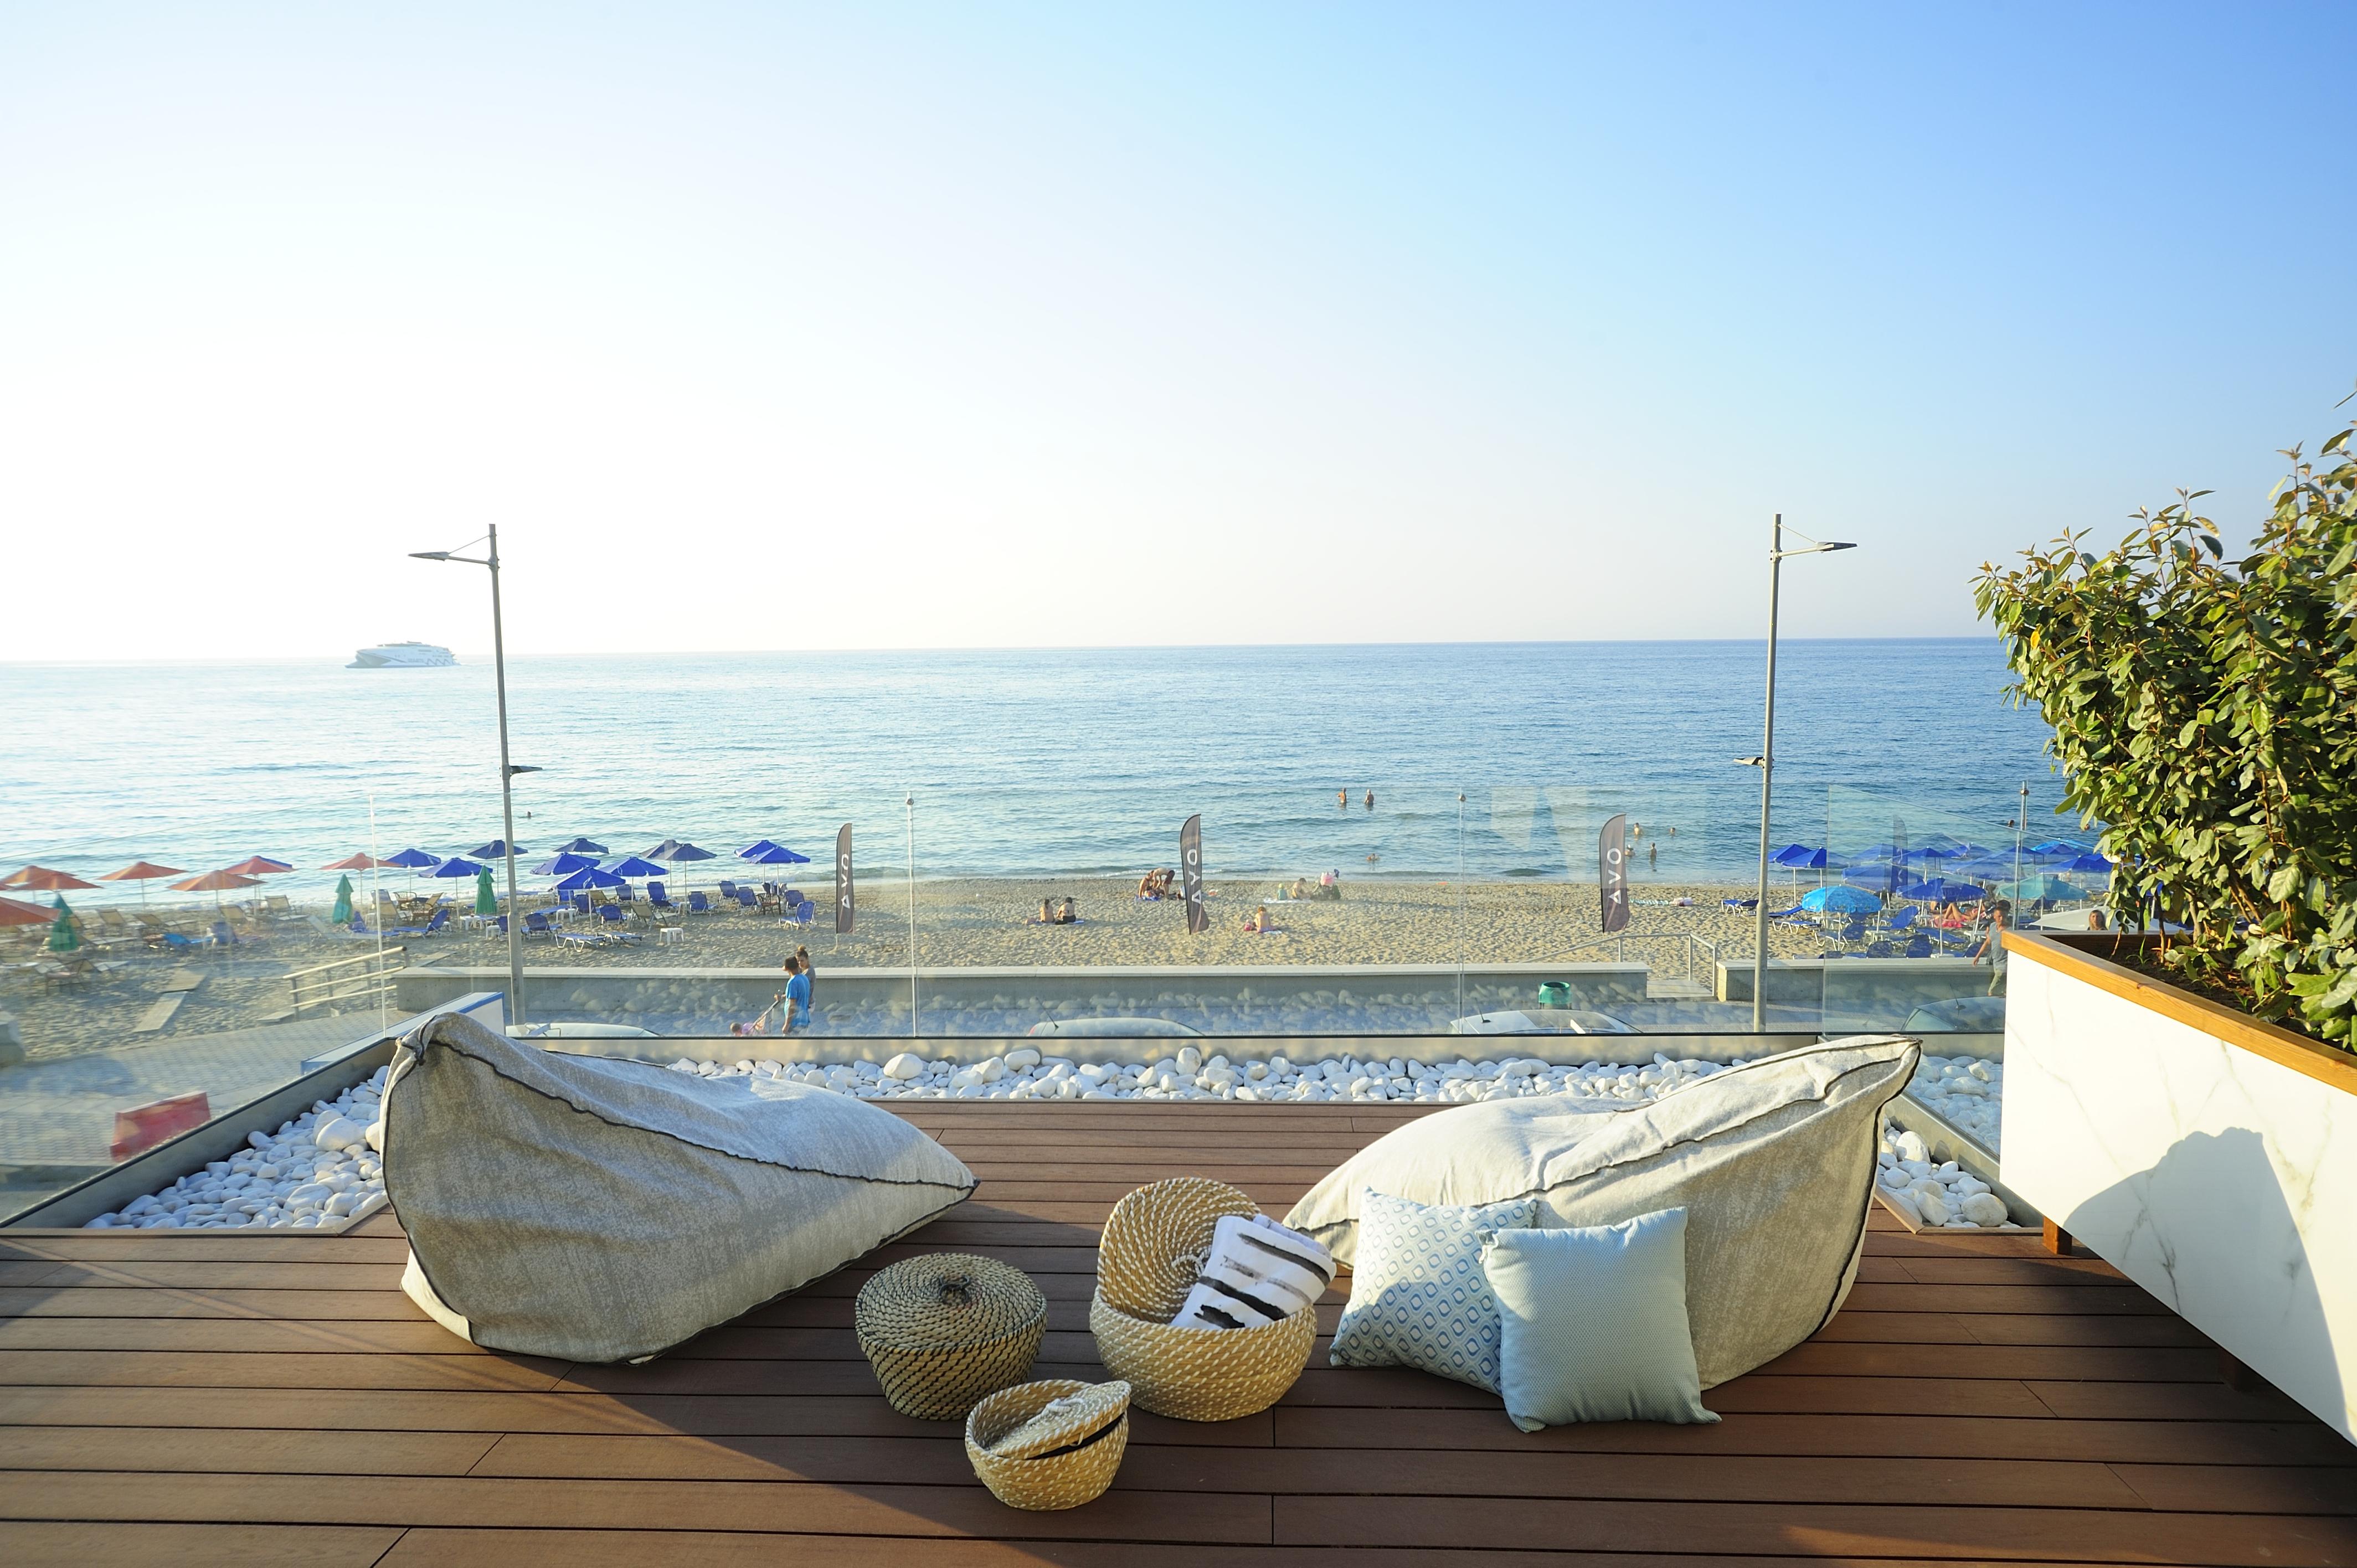 Dyo Suites Luxury Boutique Hotel Rethymno Crete - Iridium Suite